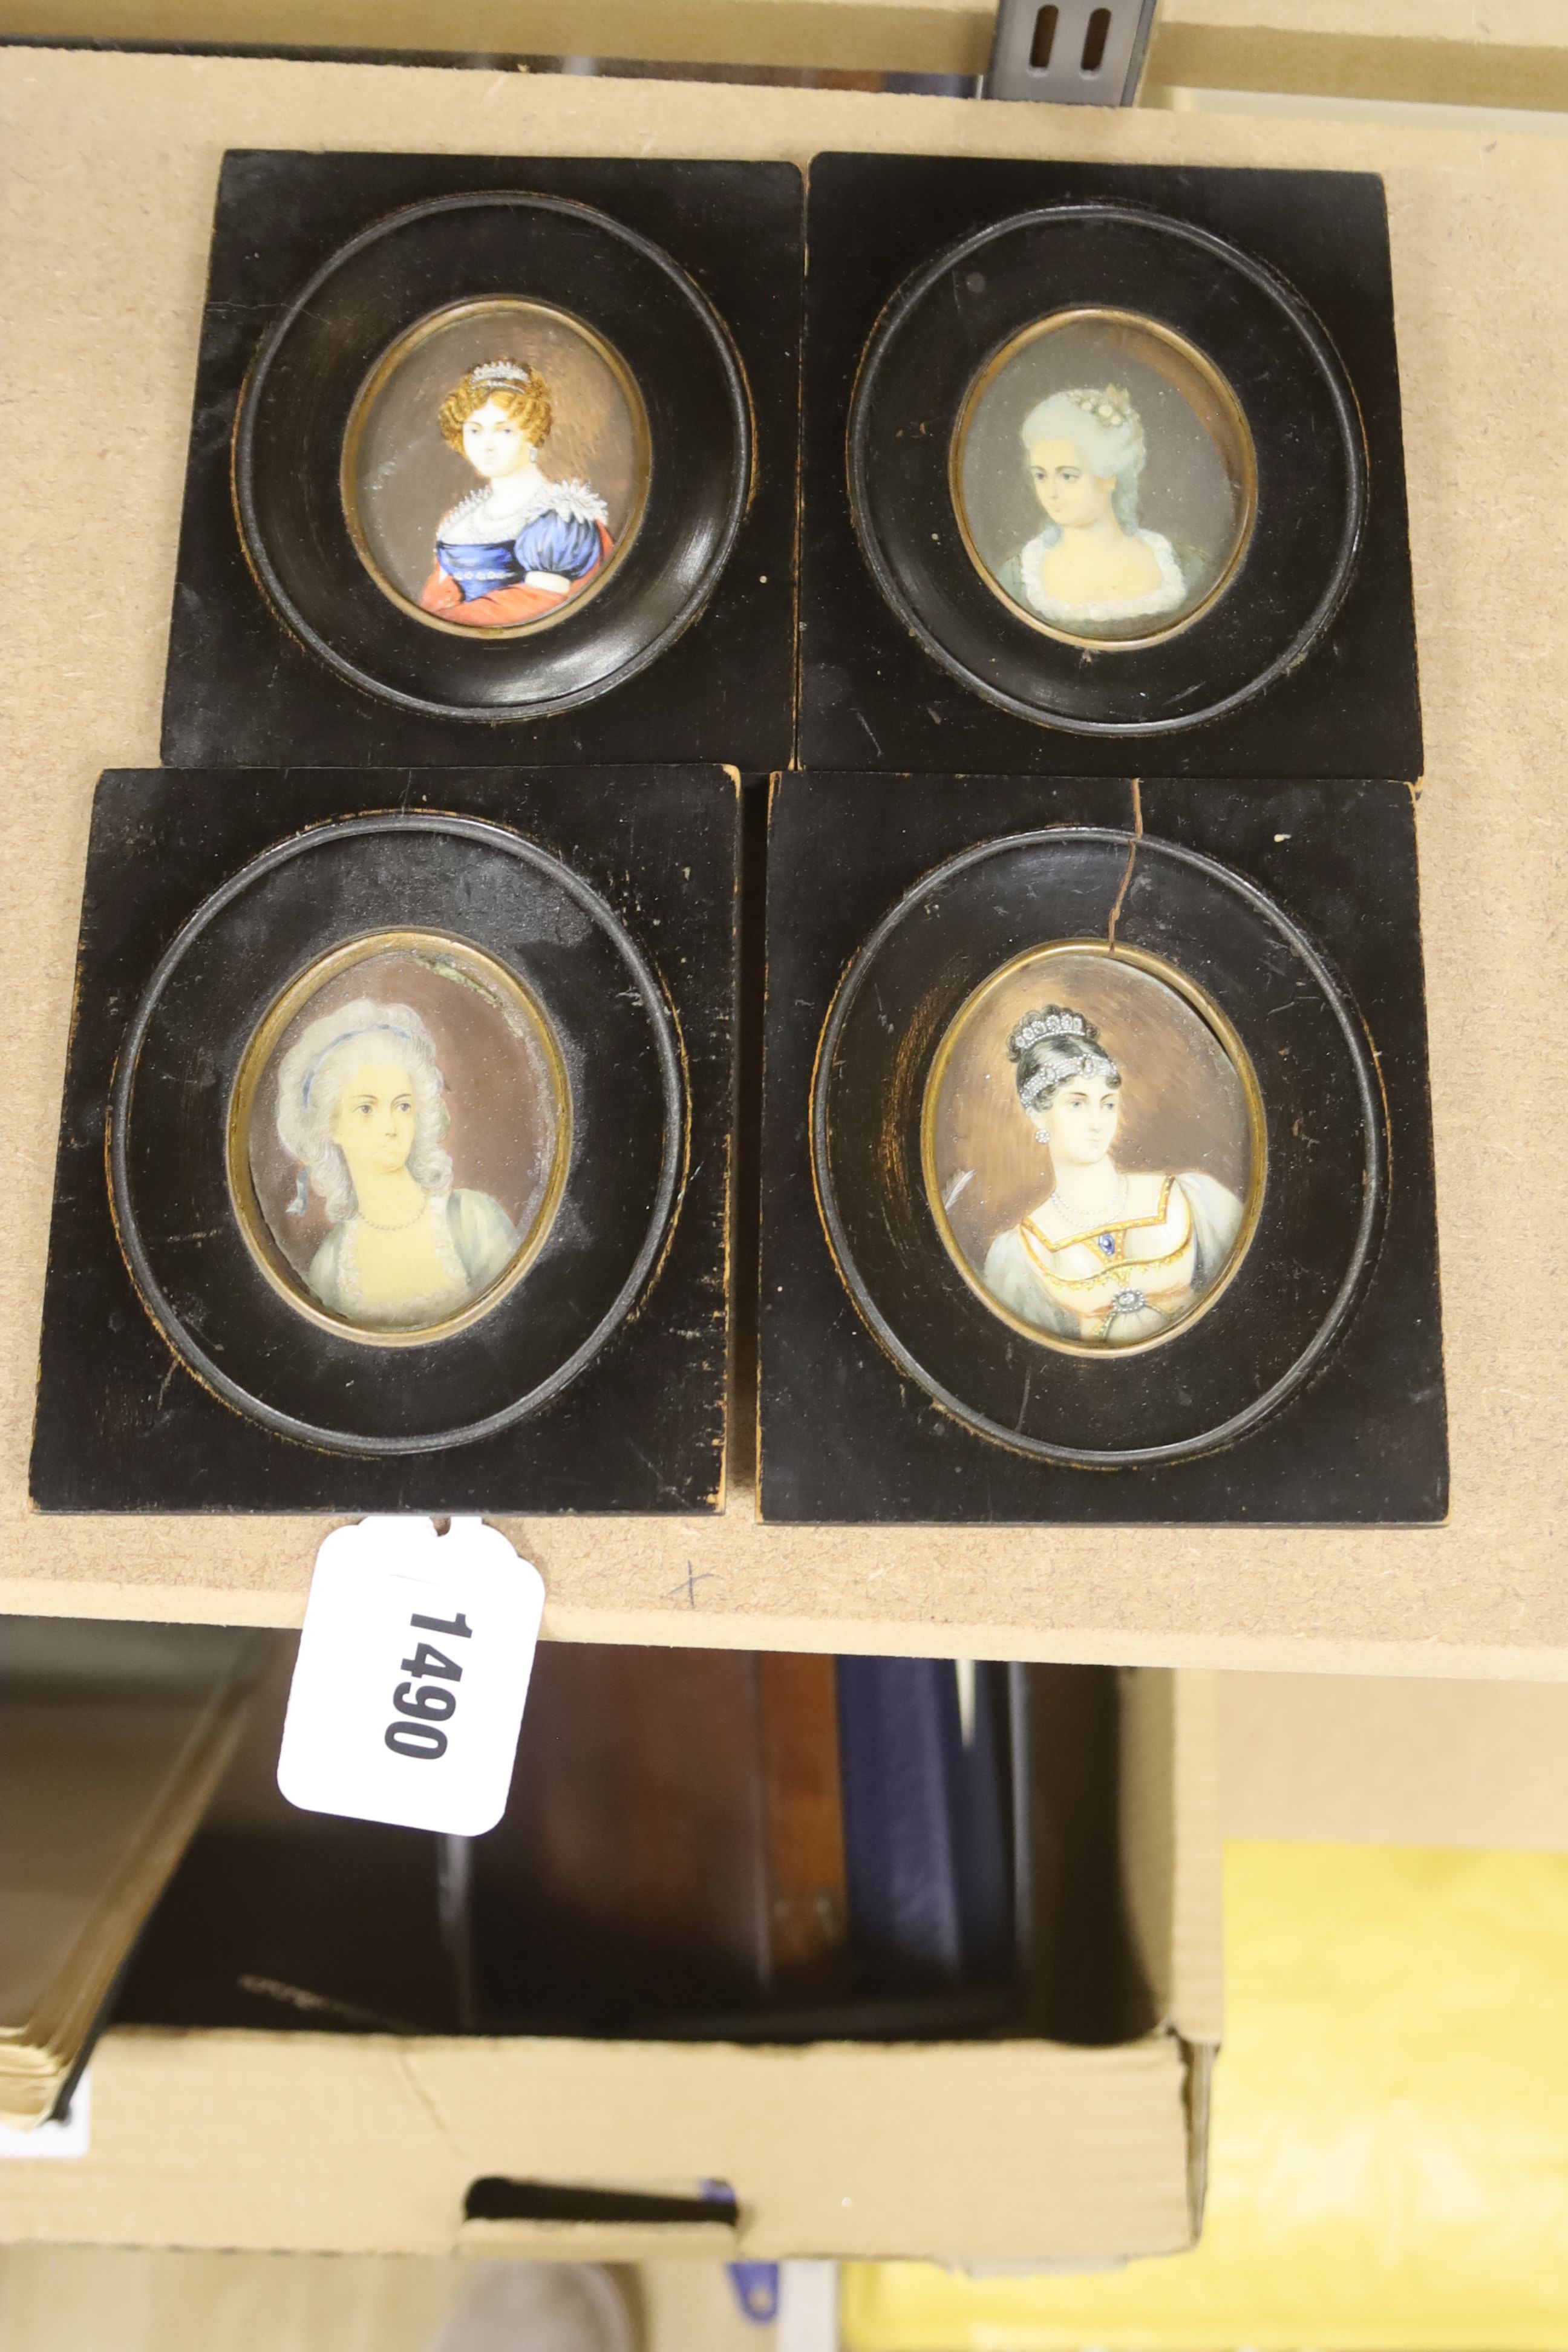 Four 19th century portrait miniatures on ivory